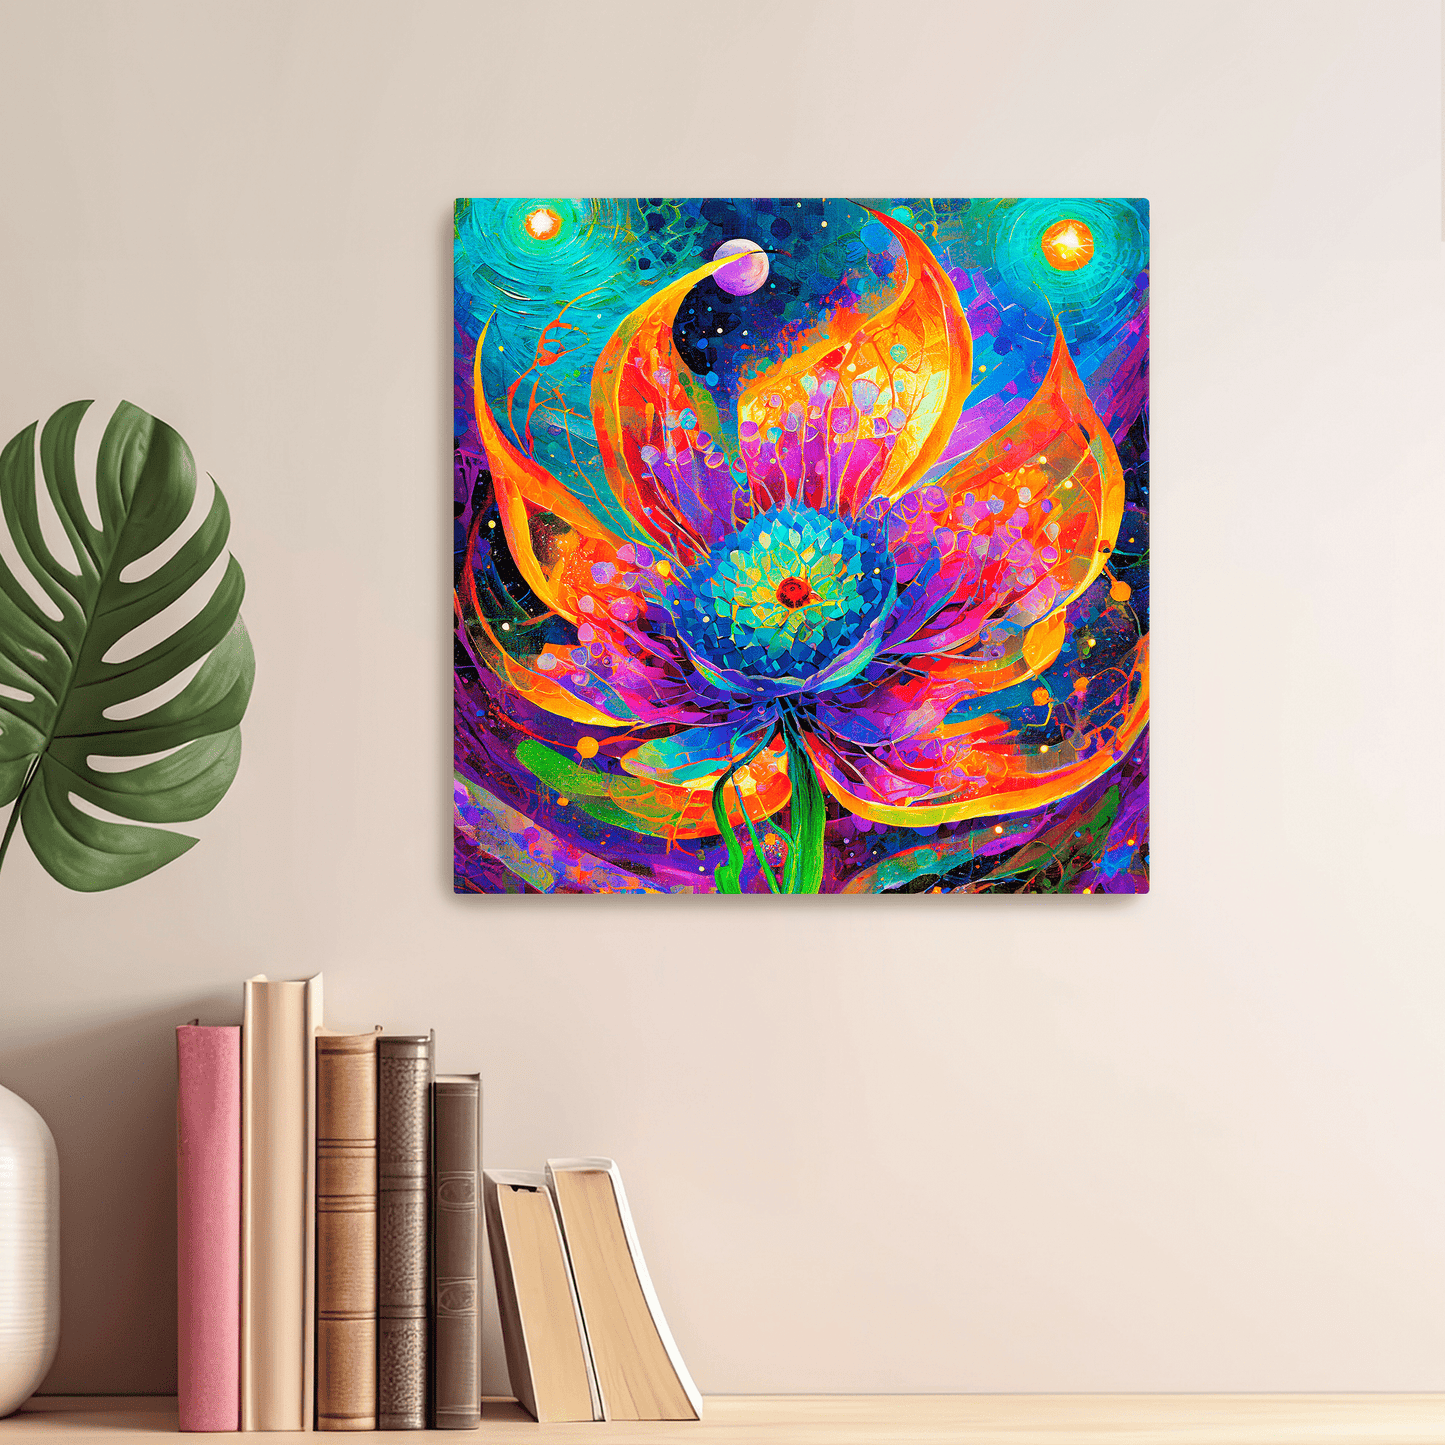 Petals of the Galaxy - Canvas Wrap - Premium Canvas Print